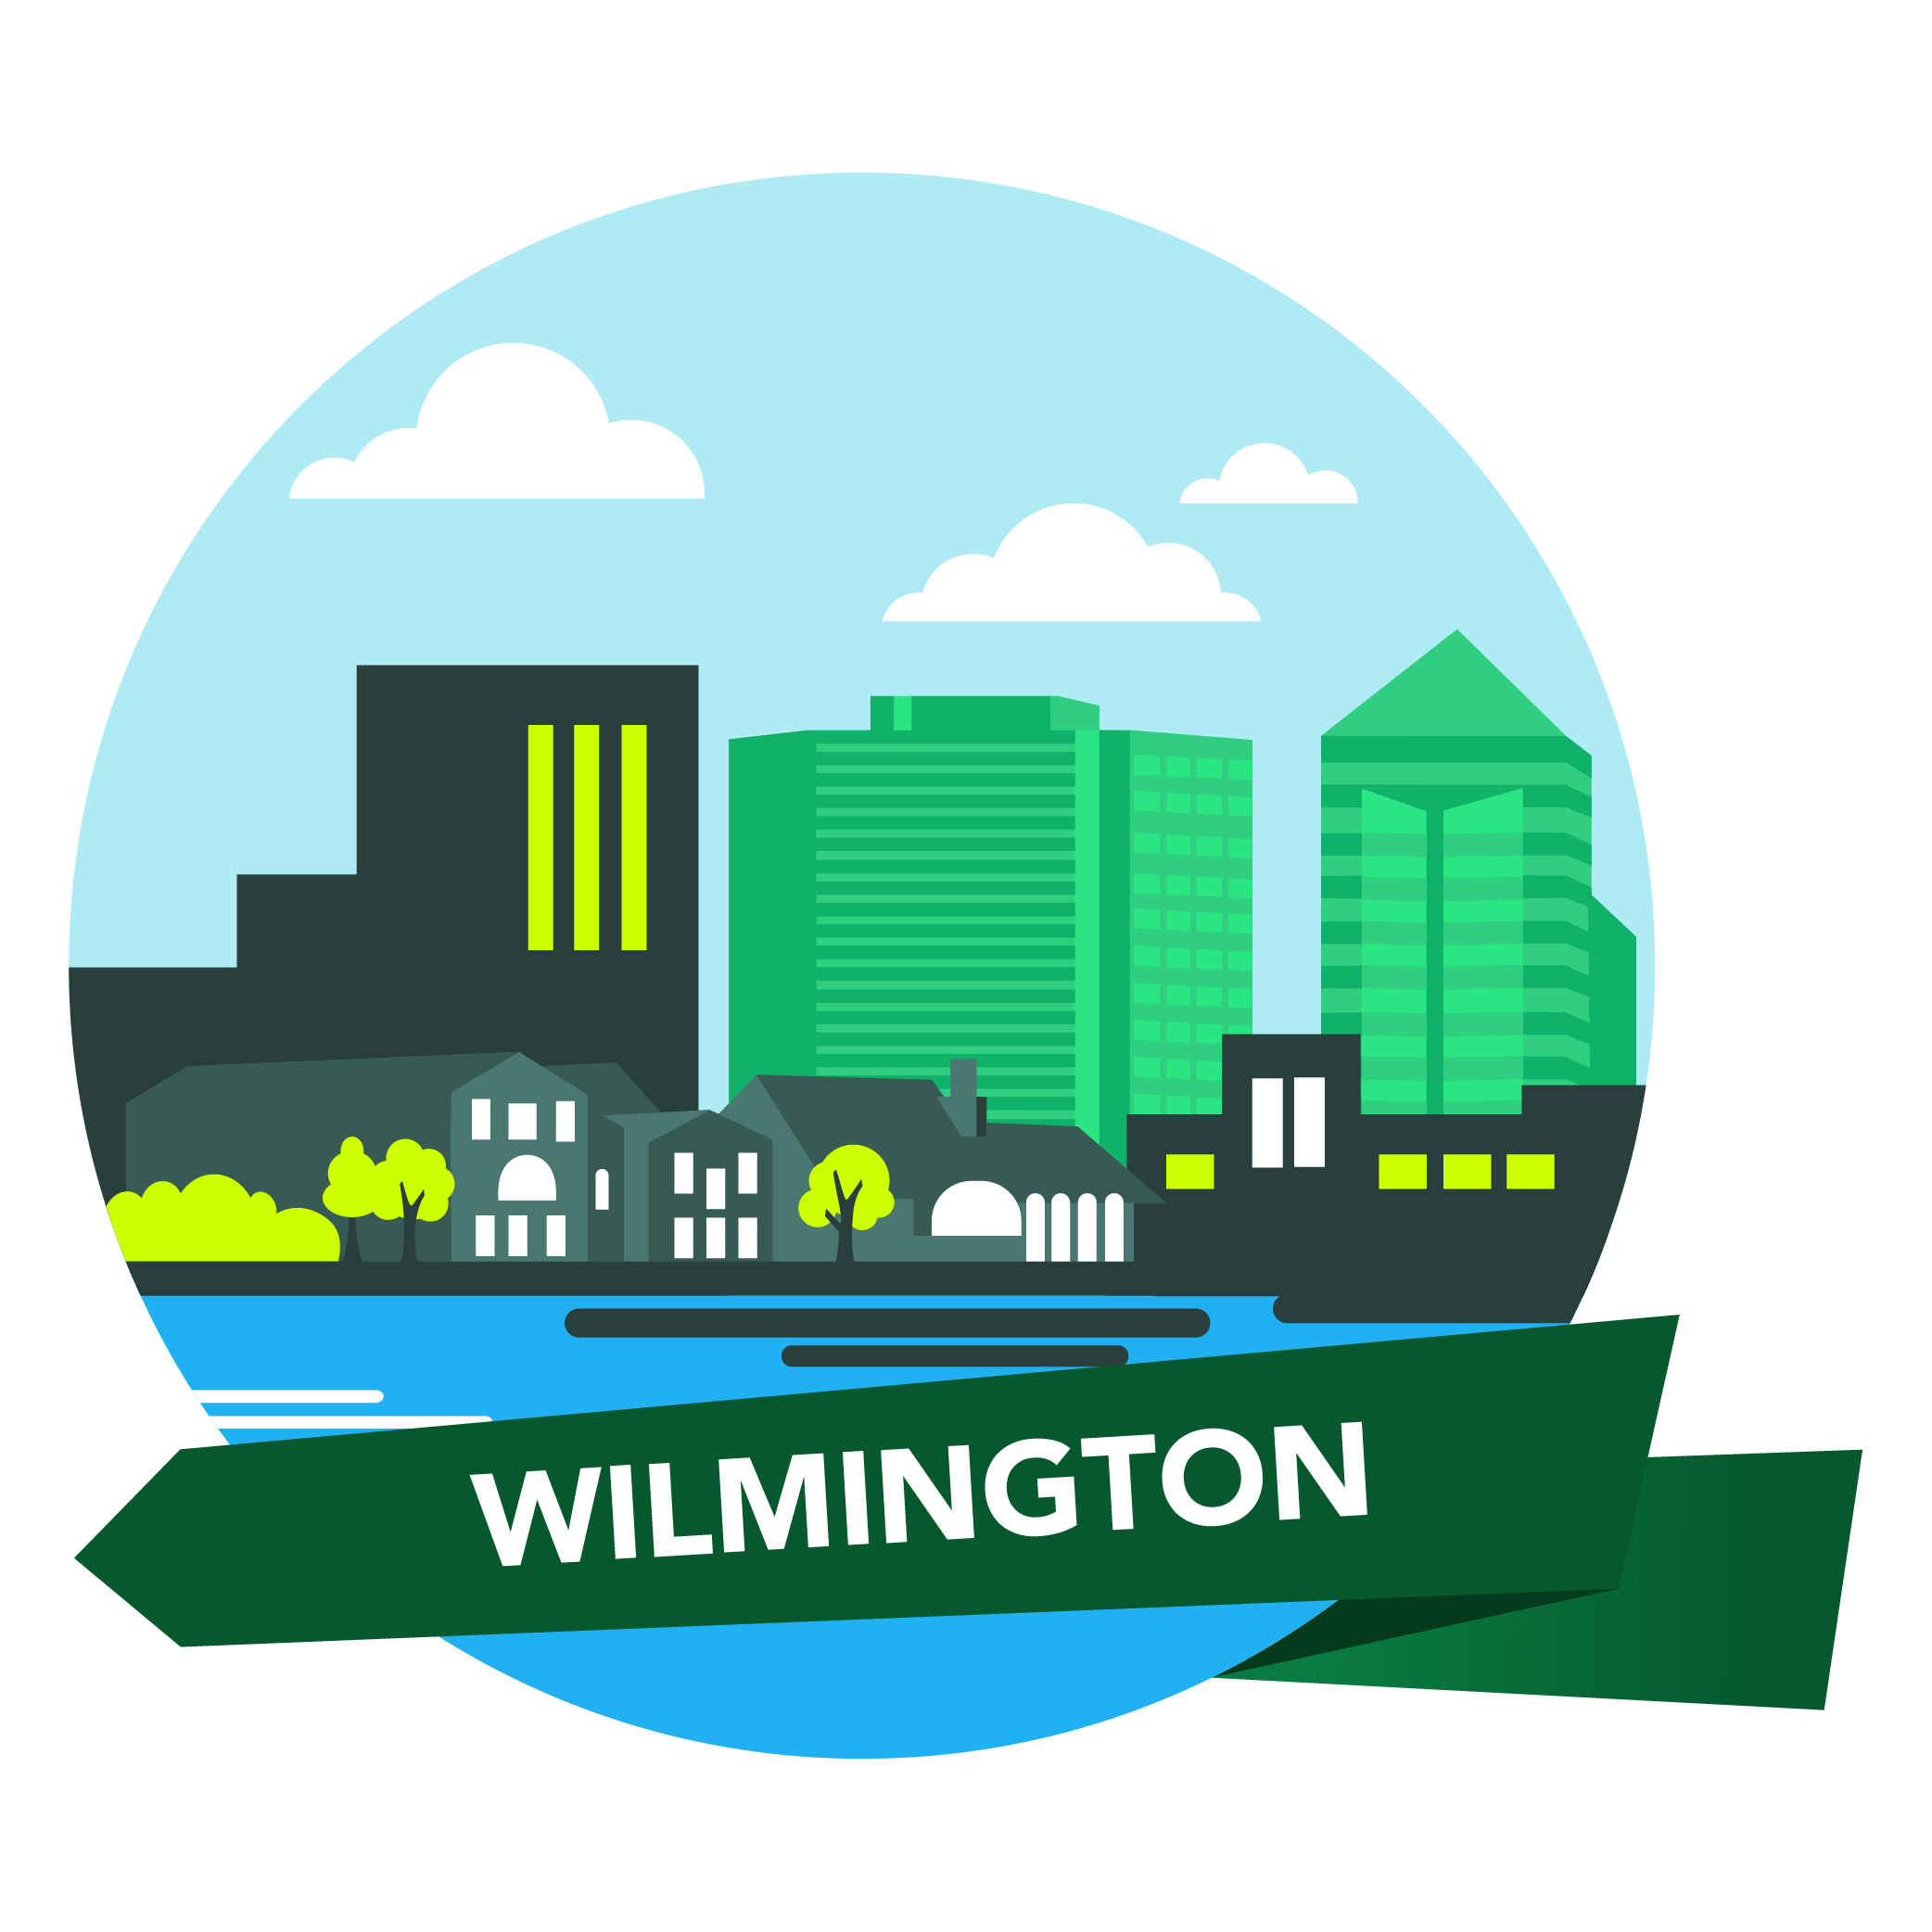 Wilmington, delaware - circle graphic skyline